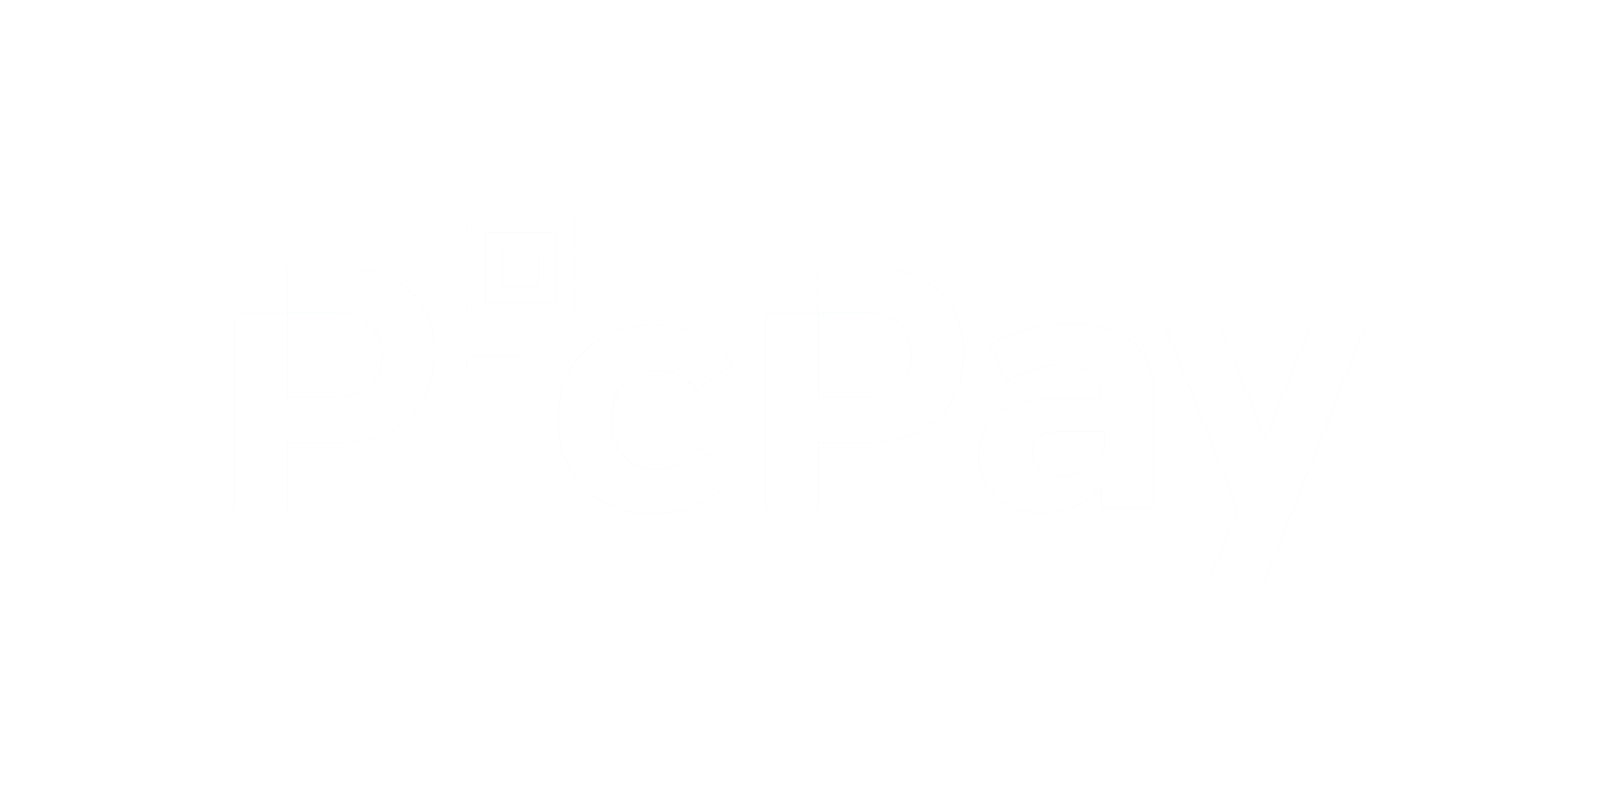 picpay-logo-1